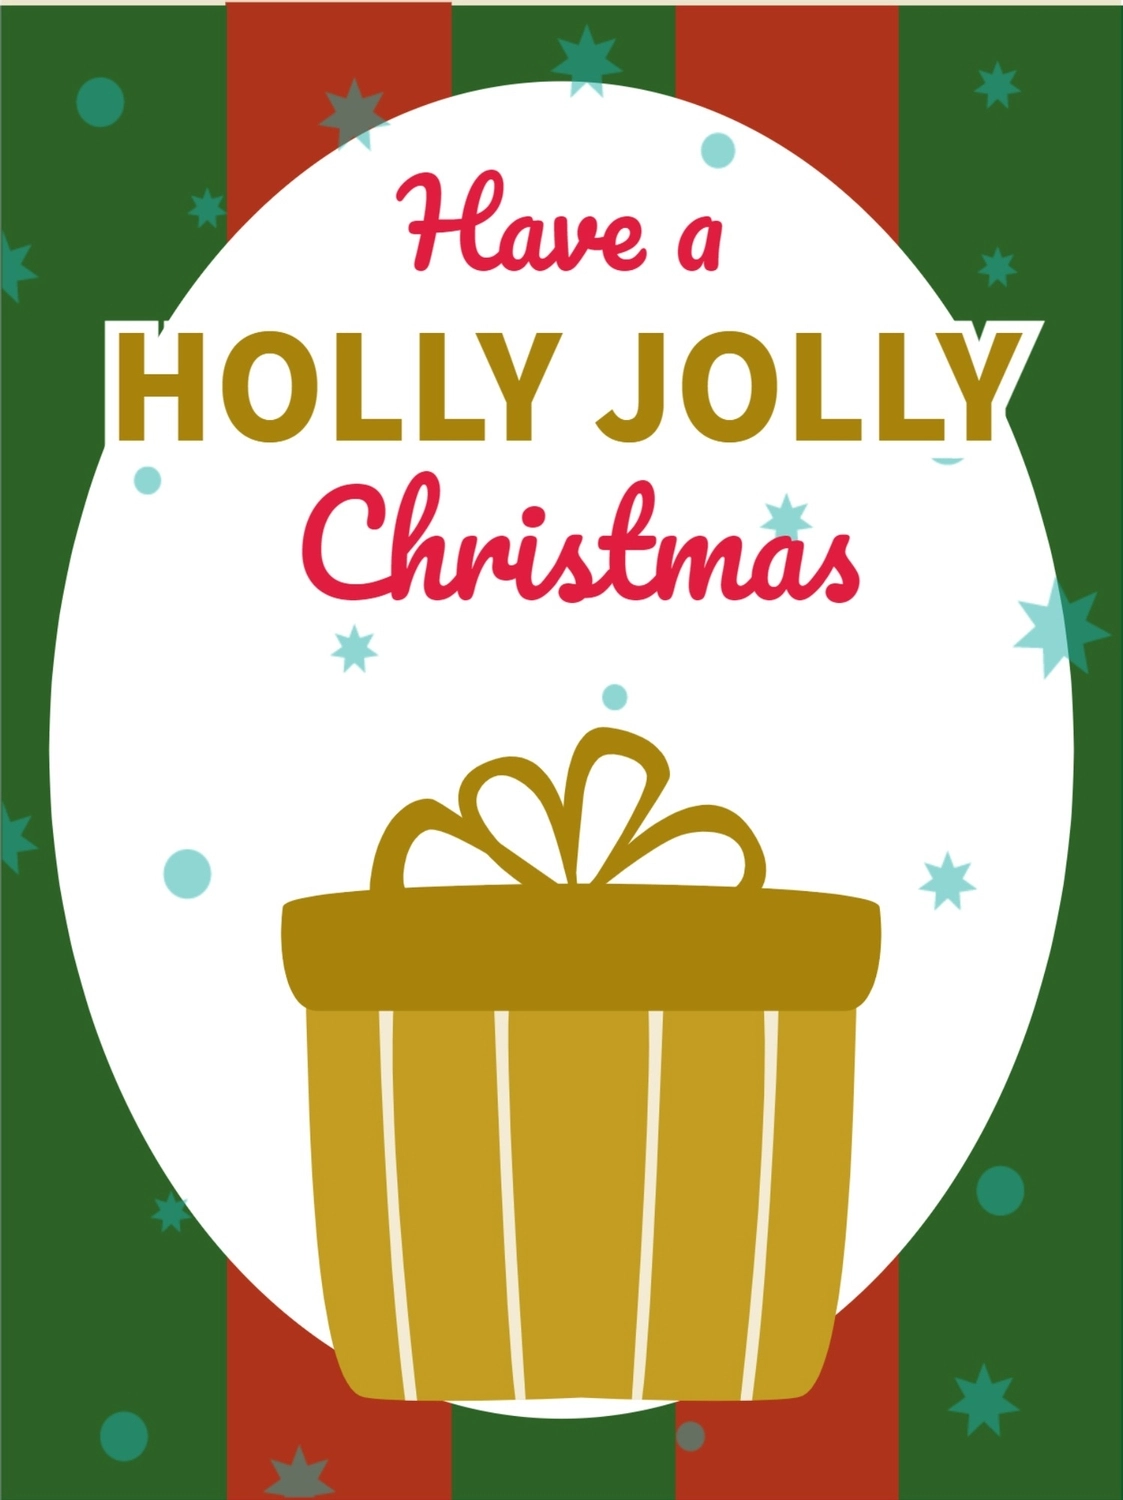 Have a HOLLY JOLLY Christmas, グリーティングカード, グリーティング, ハガキ, メッセージカードテンプレート